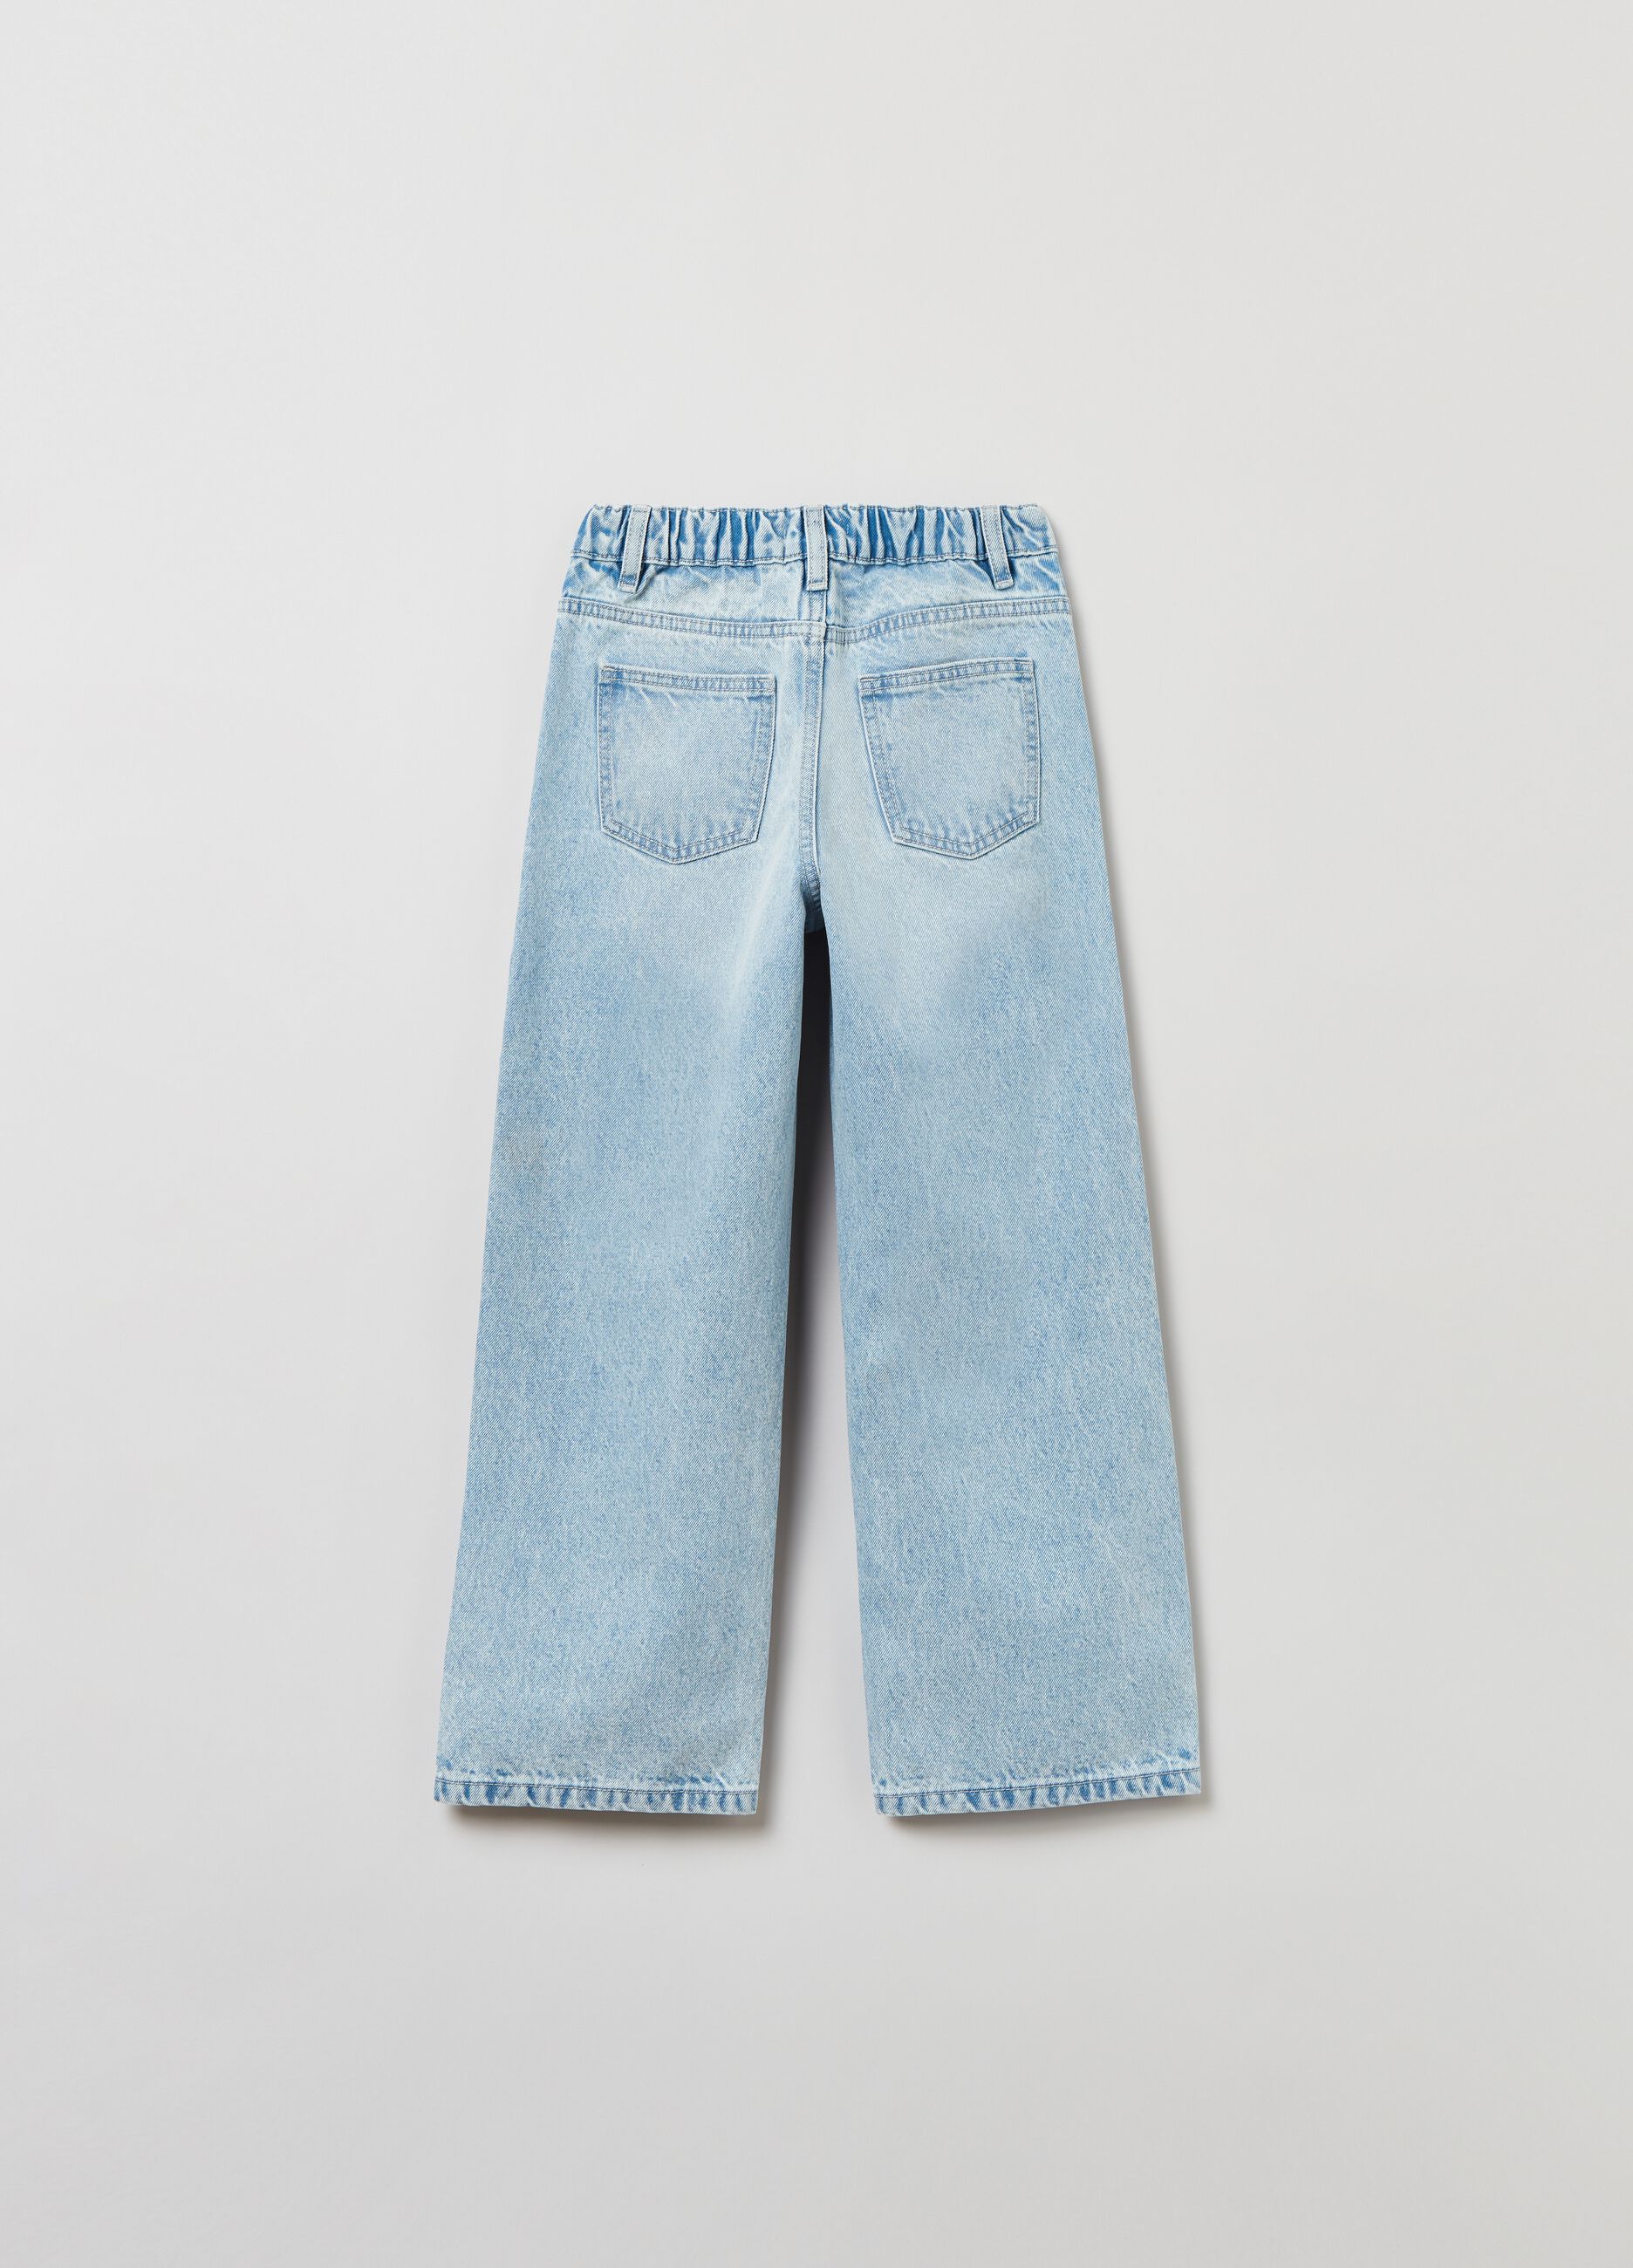 5-pocket, culotte jeans.